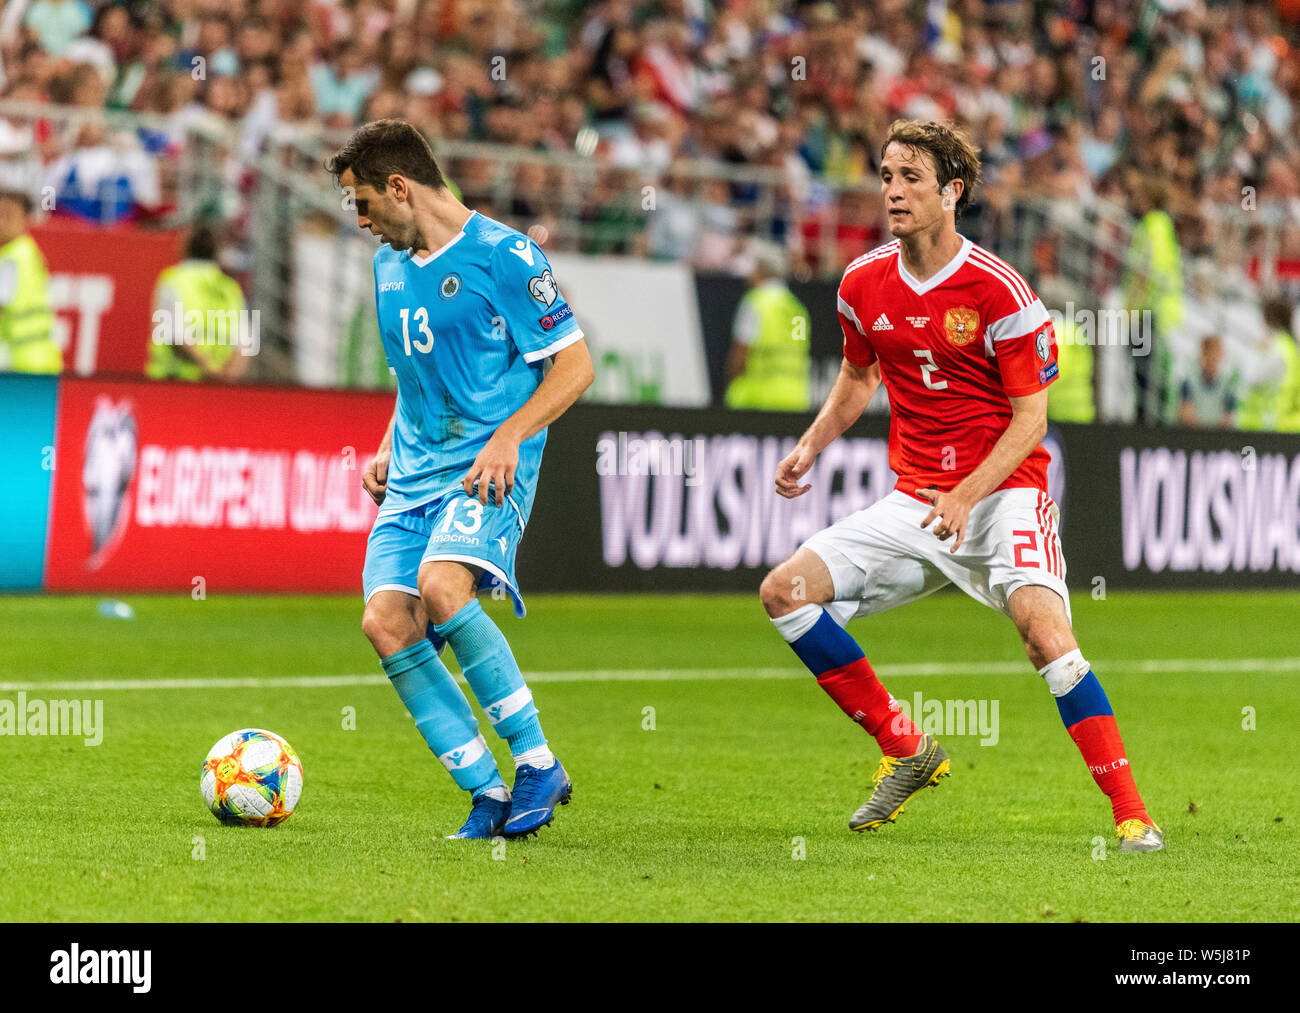 Saransk, Russia - June 8, 2019. Russia national team defender Mario Fernandes against San Marino national team defender Andrea Grandoni during UEFA Eu Stock Photo